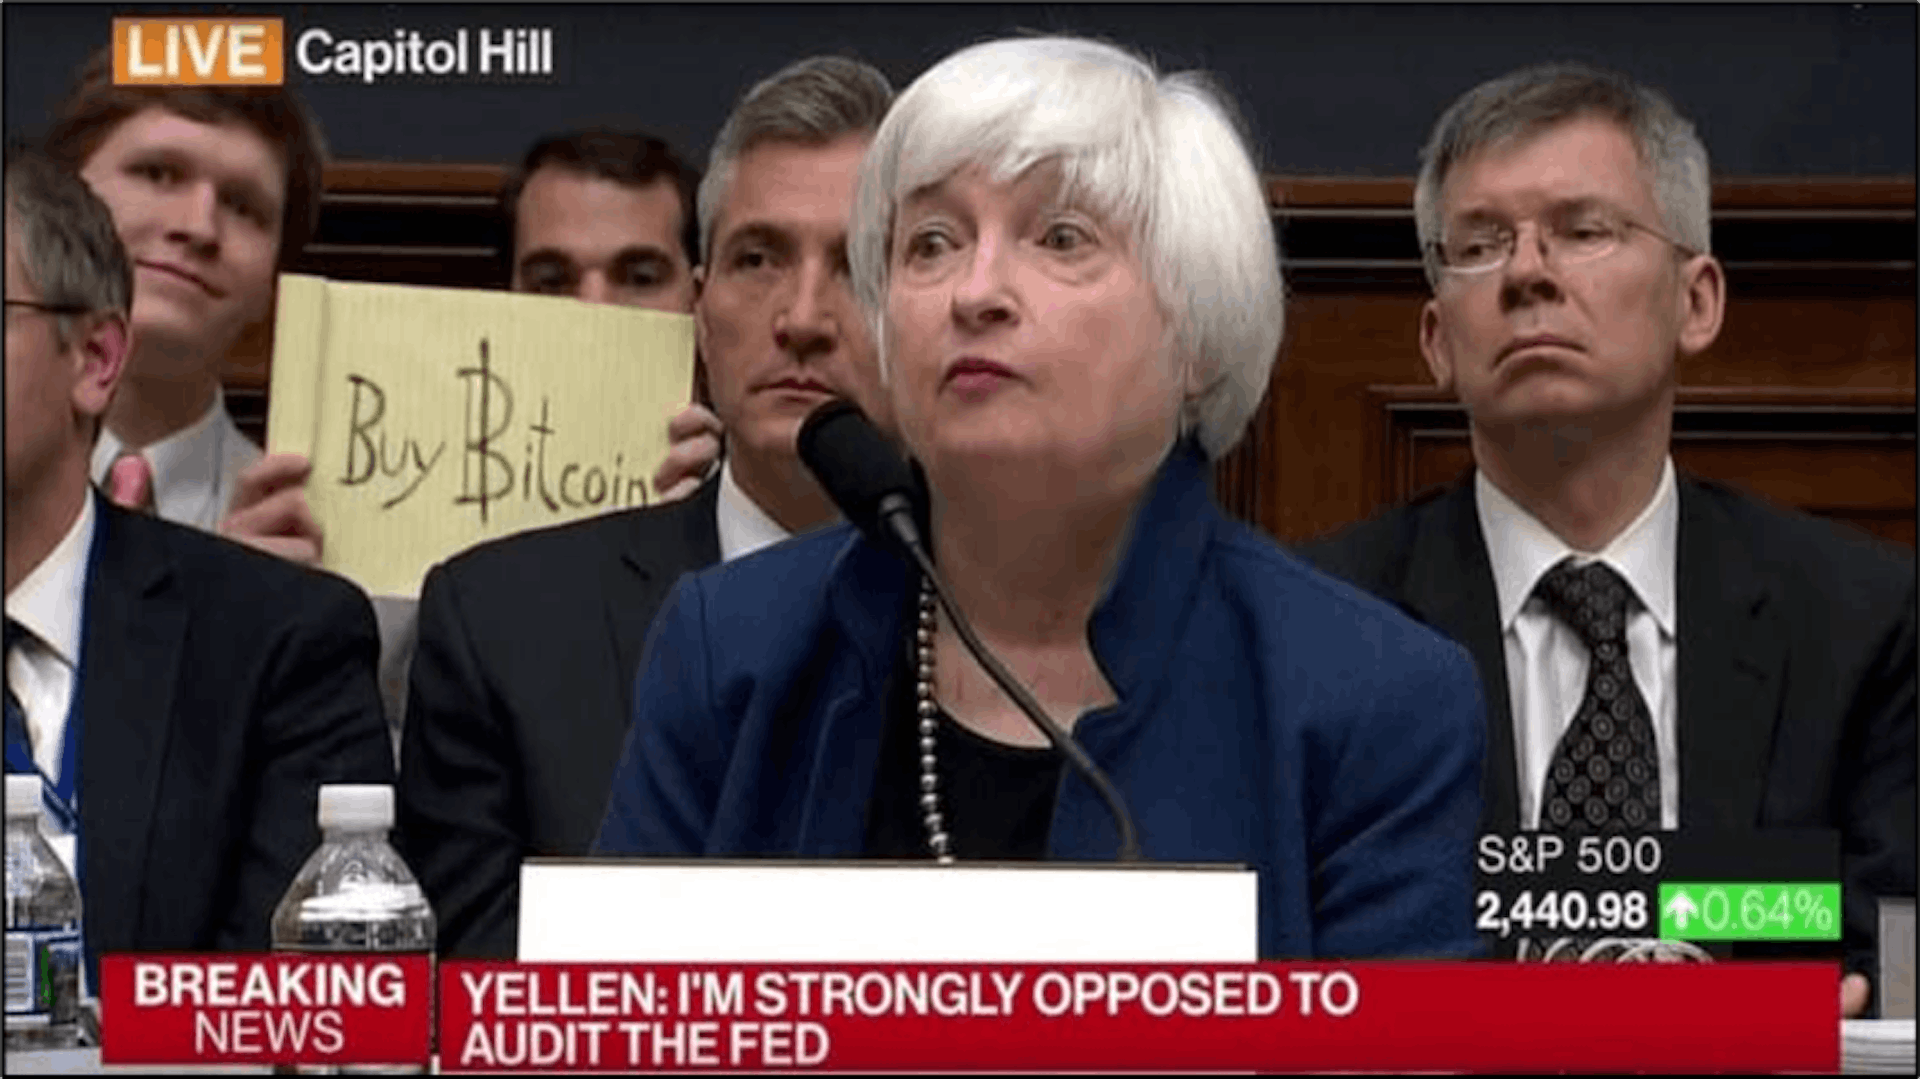 July 2017: Birth of an iconic meme. “Bitcoin Sign Guy” Christian Langalis photobombs Janet Yellen